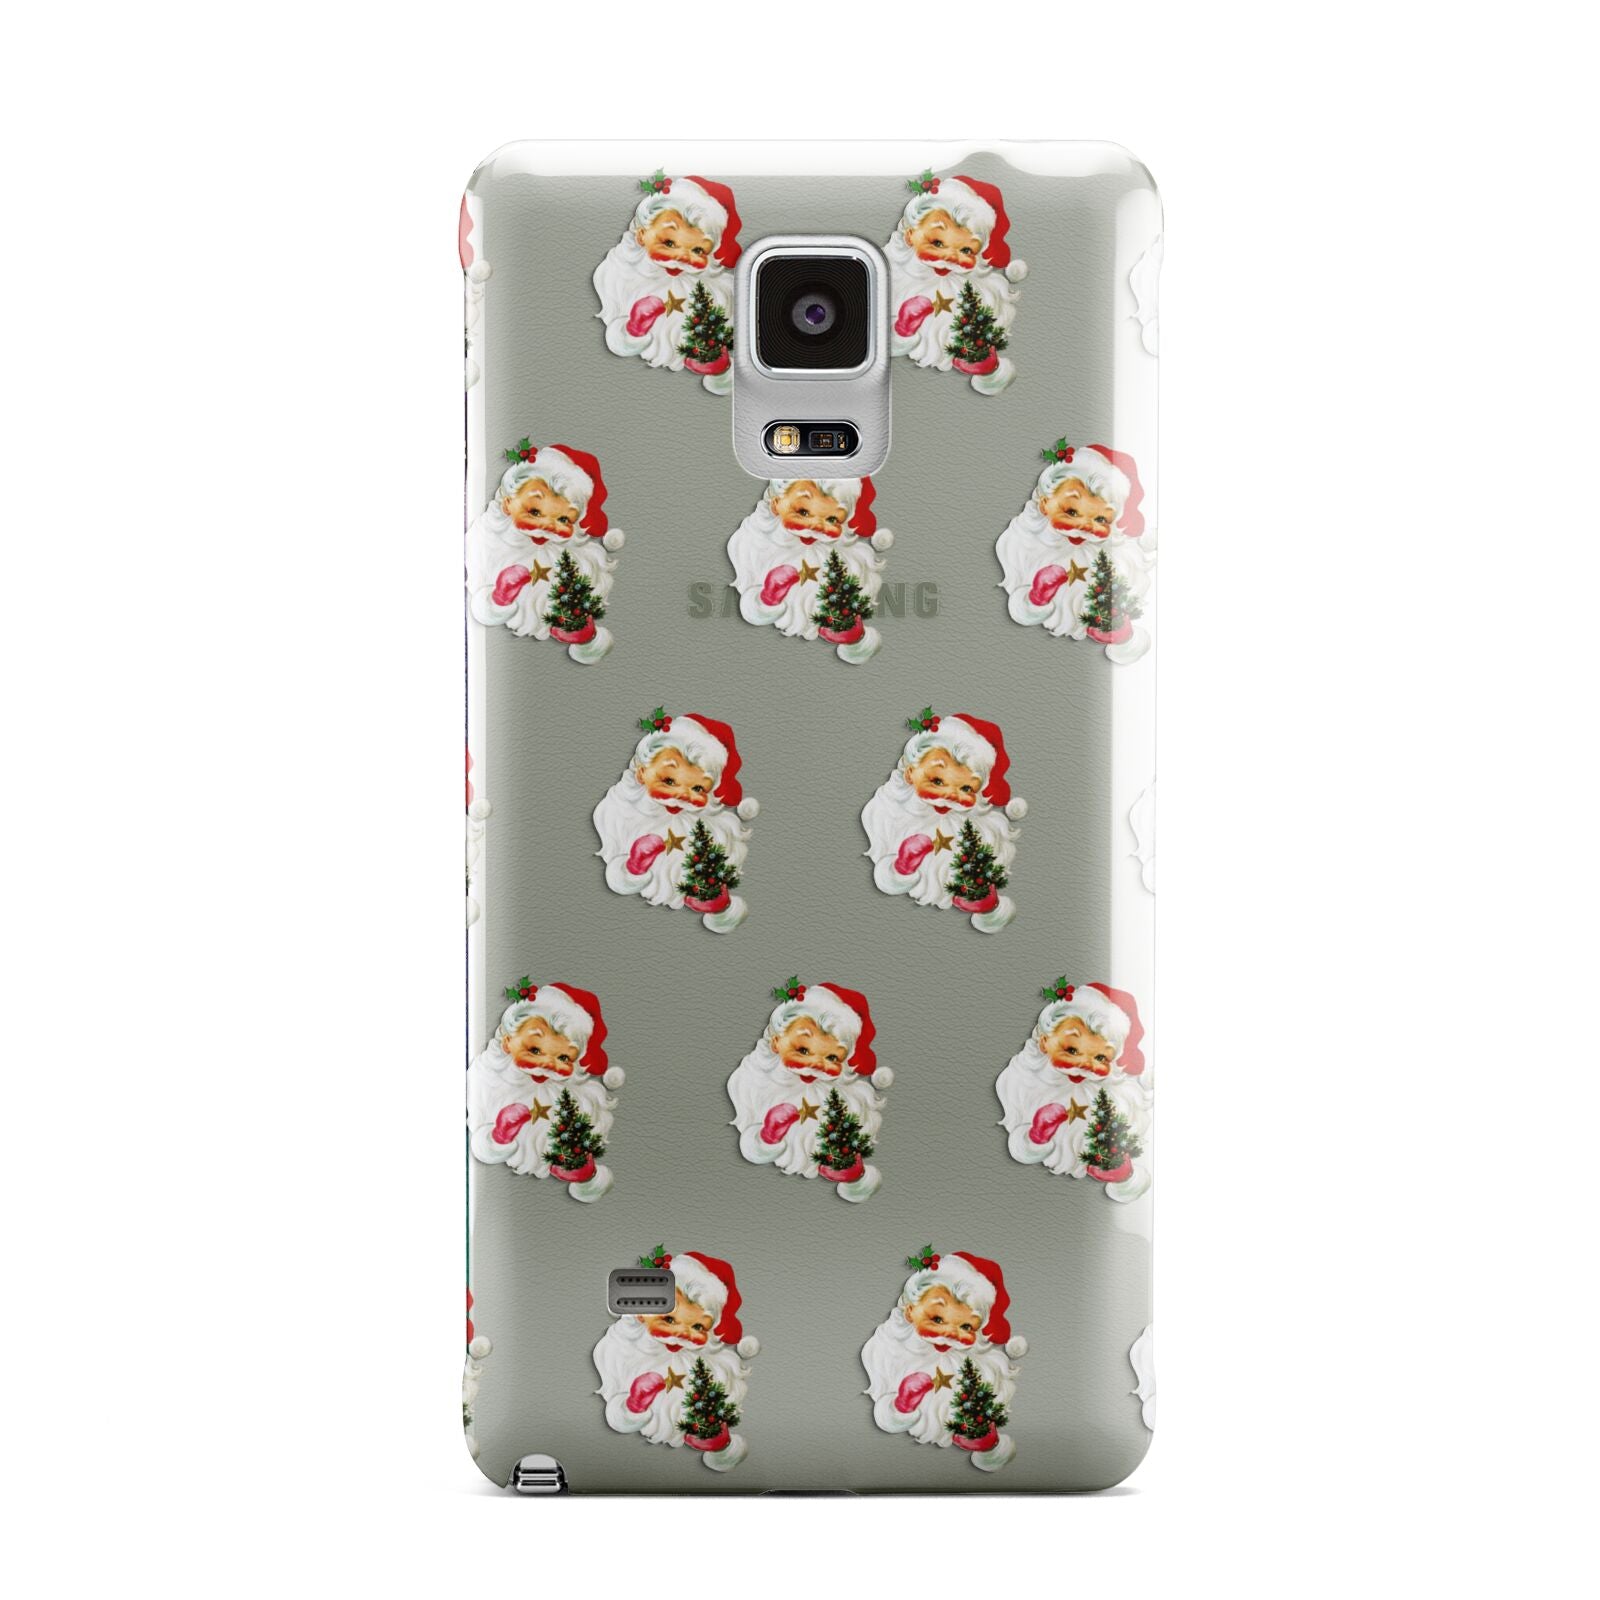 Retro Santa Face Samsung Galaxy Note 4 Case